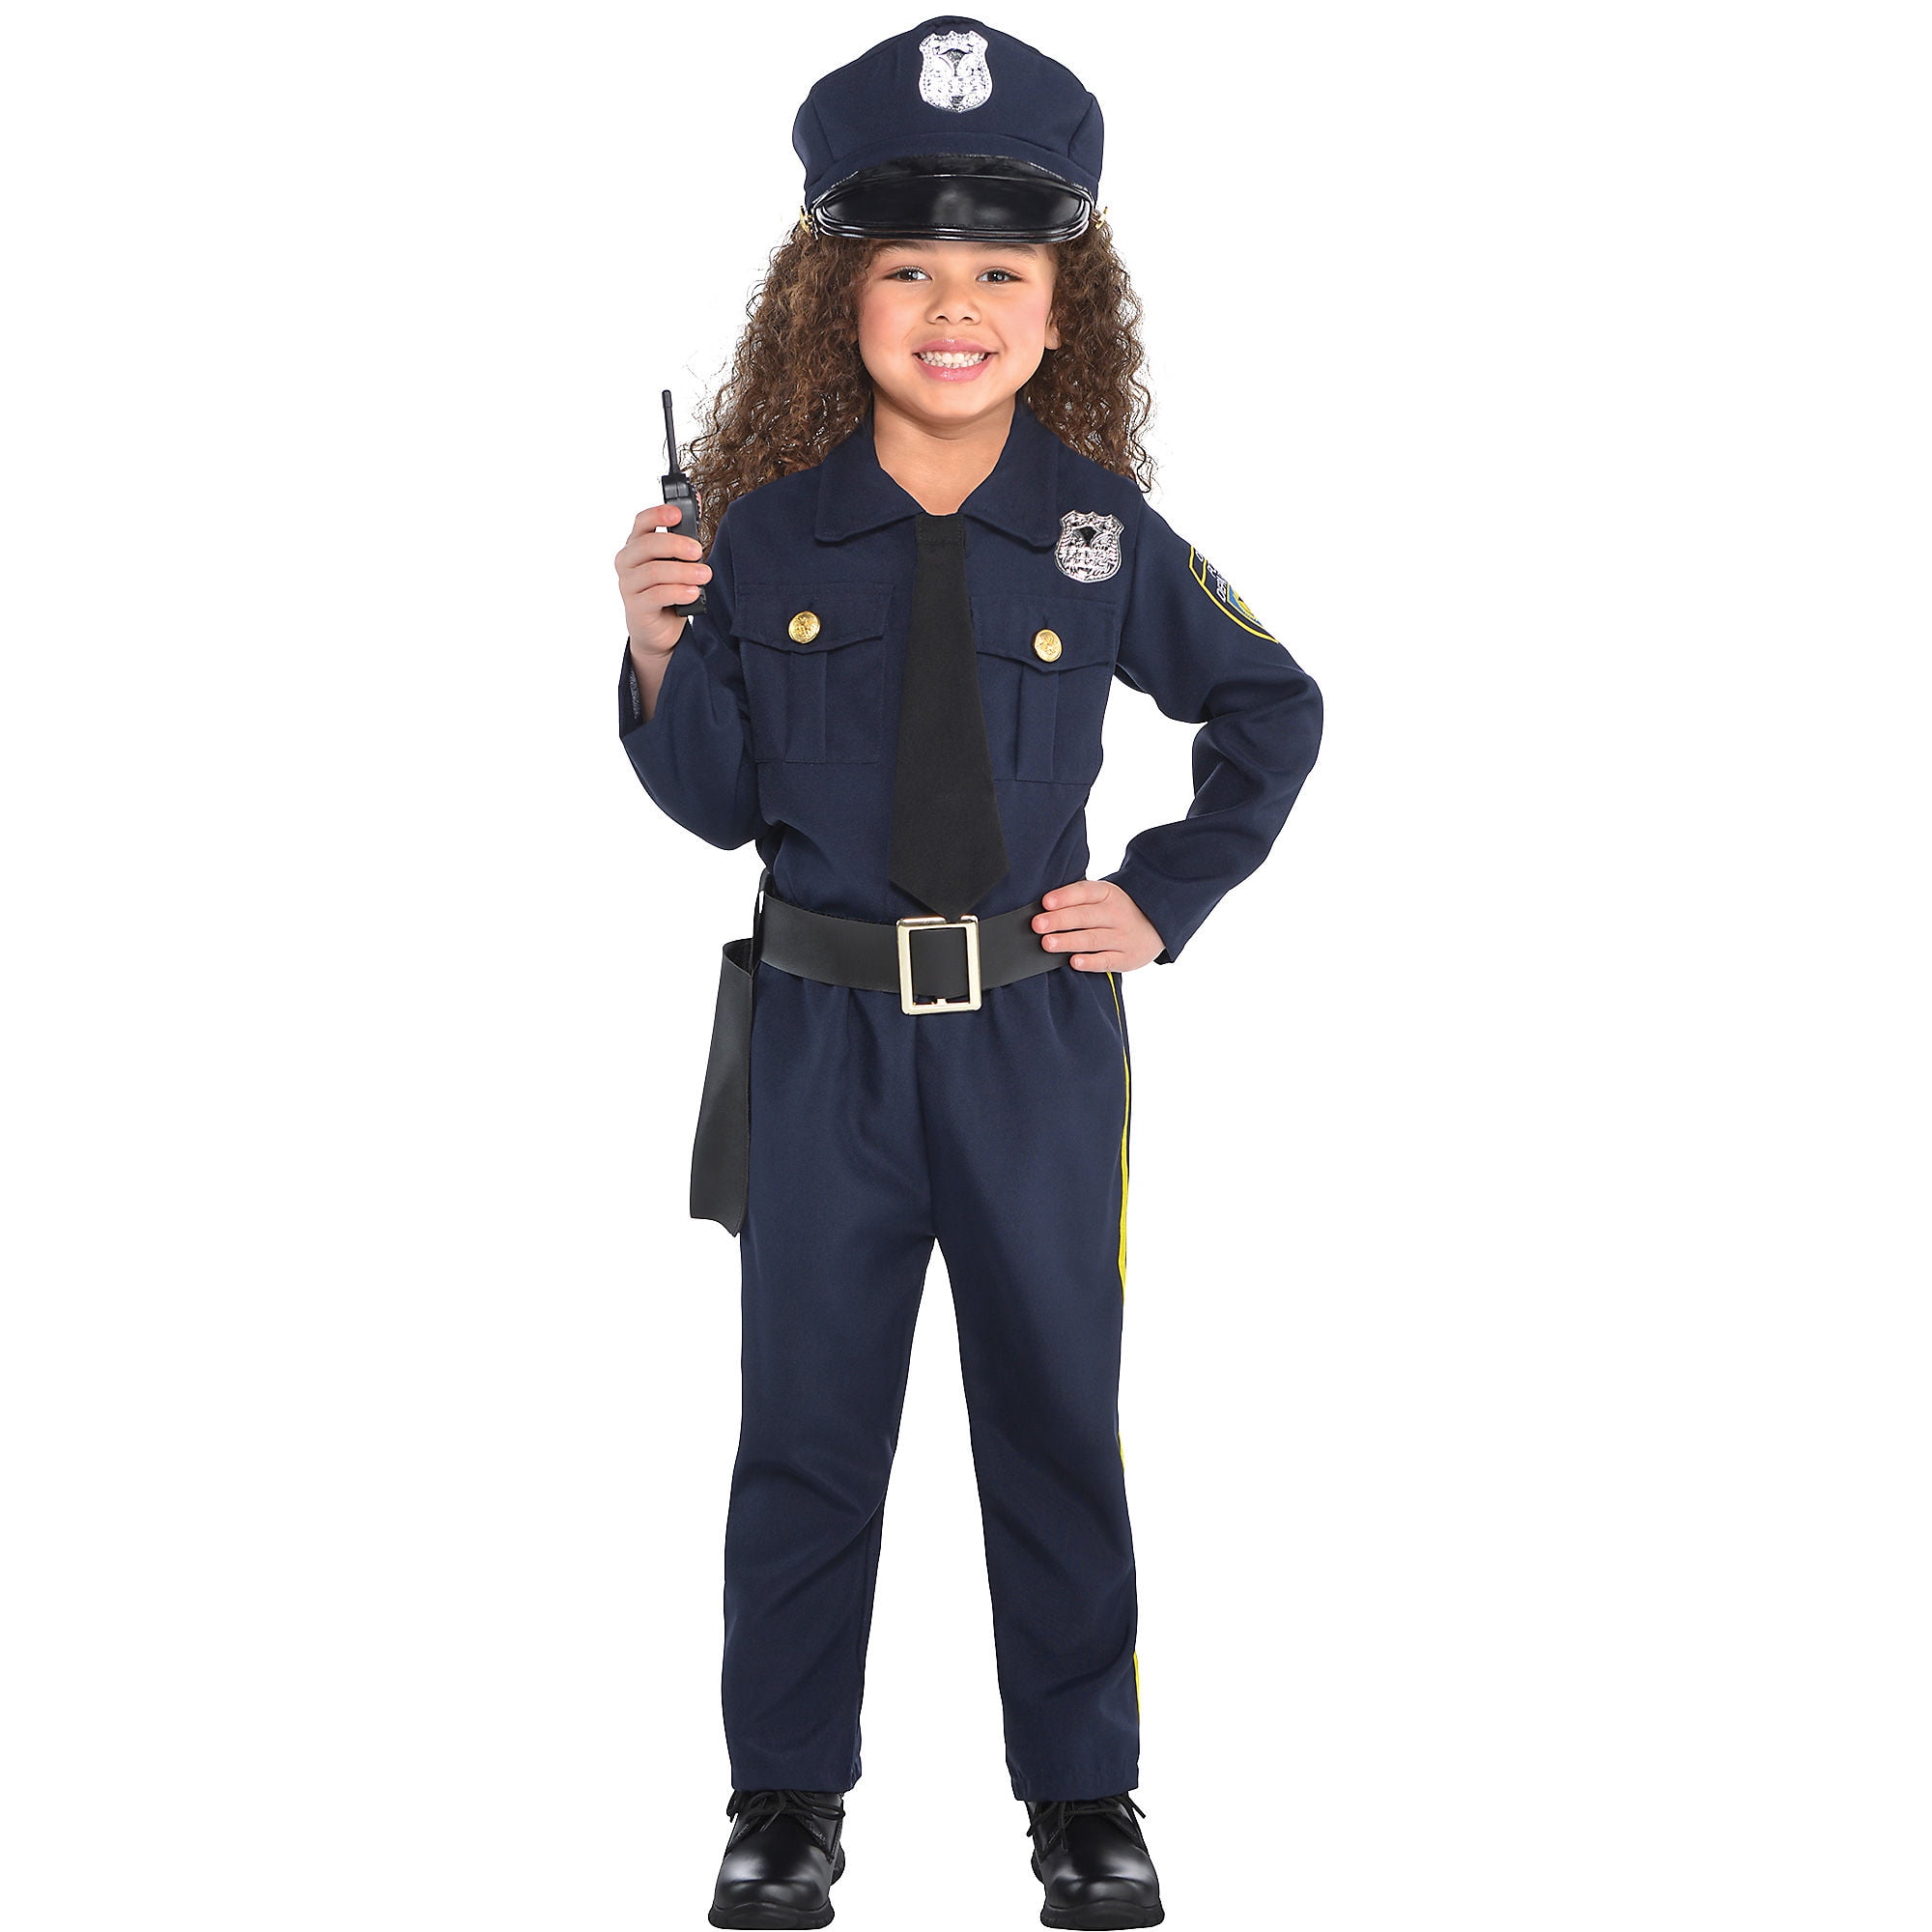 Kids Halloween Costume Police Officer Costume Personalized Police Uniform Dress Up Career Day Outfit Police Officer Outfit SWAT Helmet Kleding Unisex kinderkleding pakken 